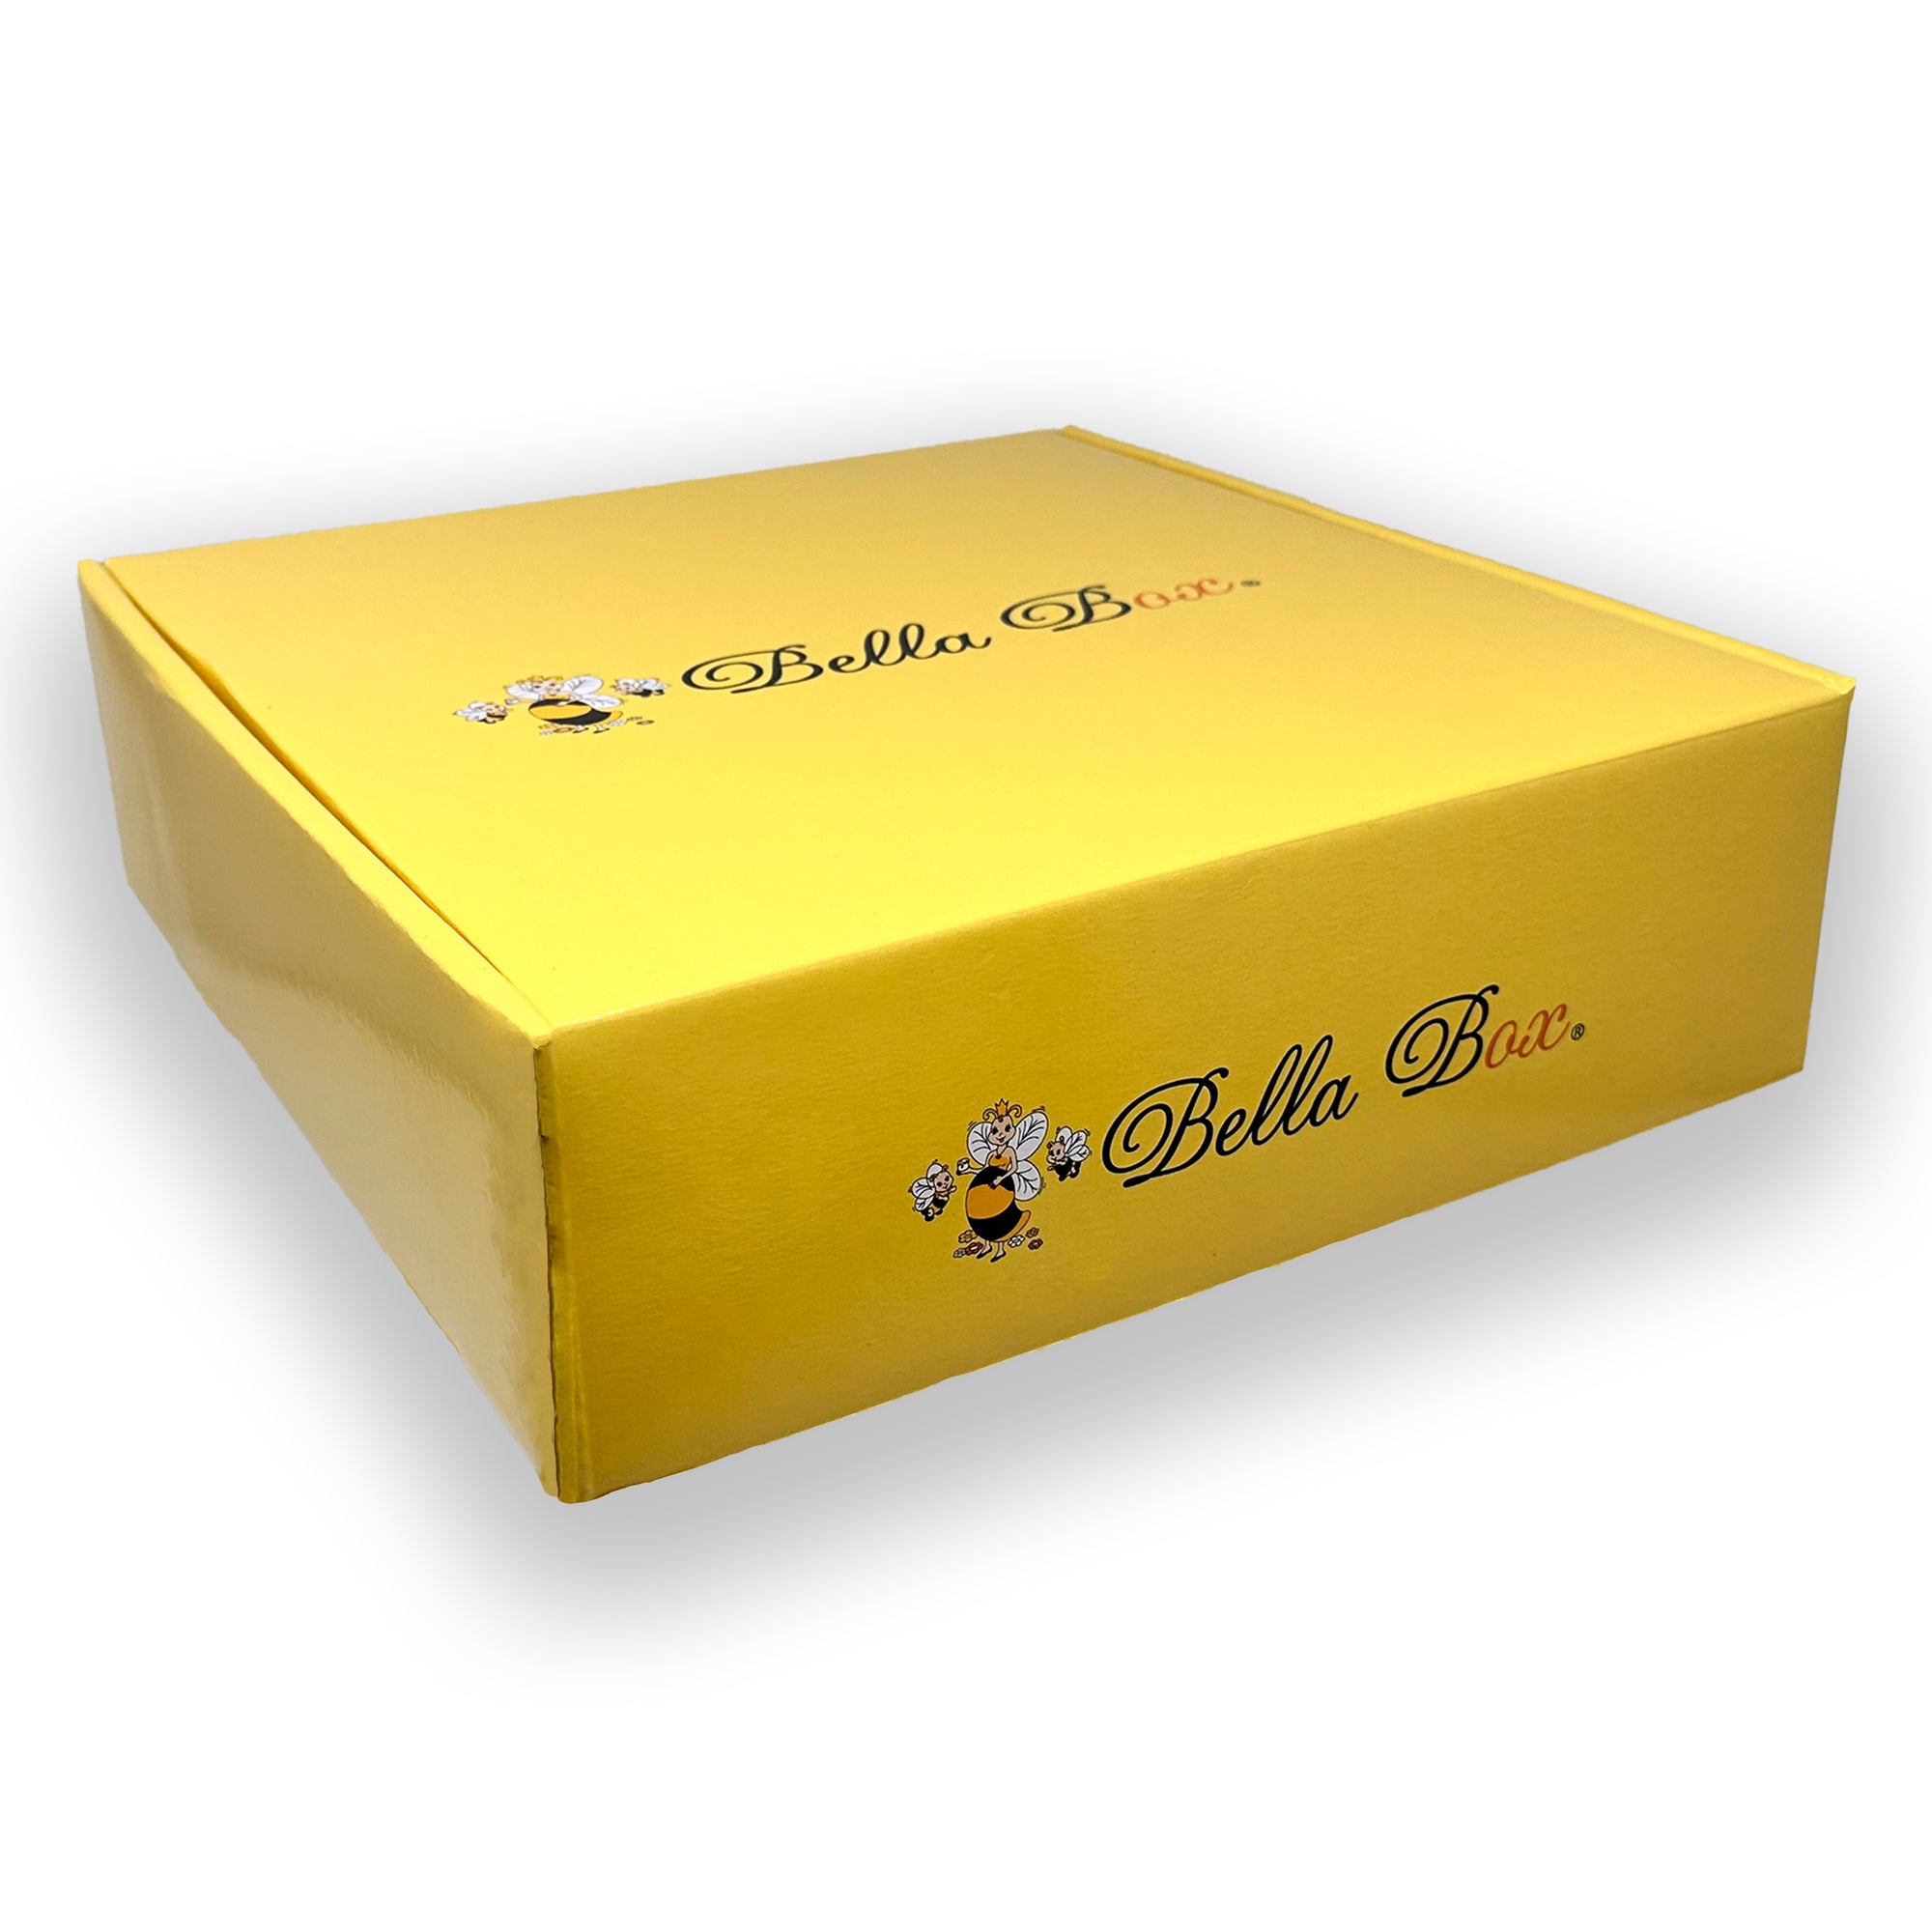 Bella B Gift Set - Bubble Bath 8 oz and Baby Massage Oil 3.3 oz